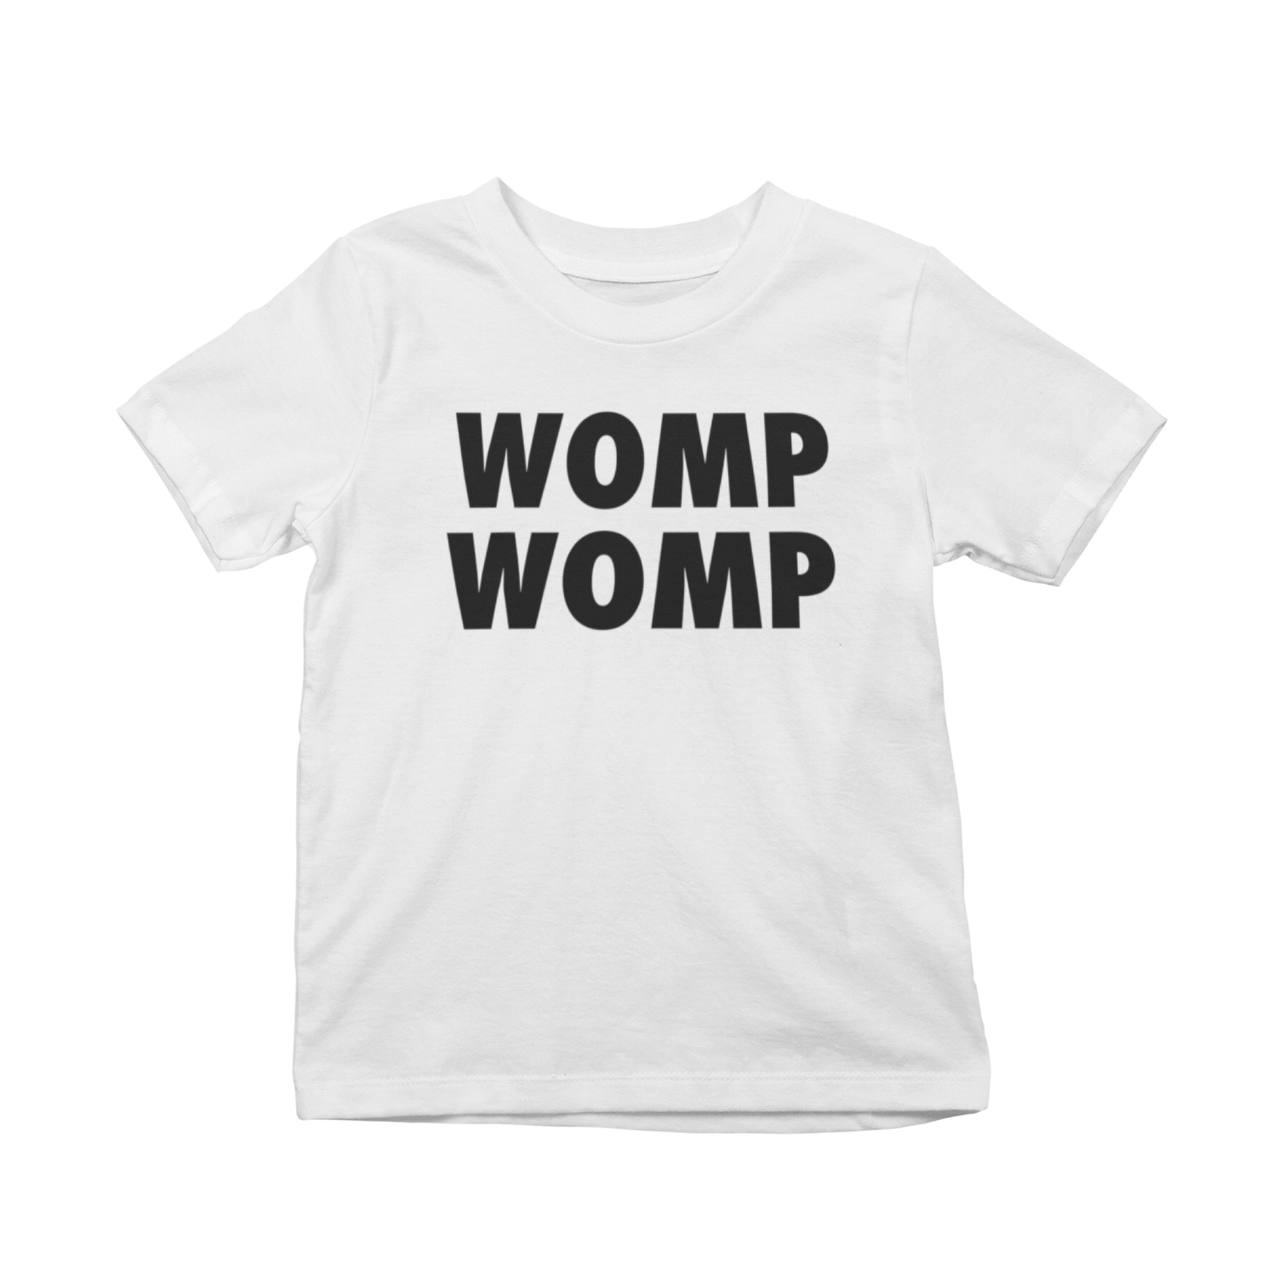 Womp Womp T-Shirt